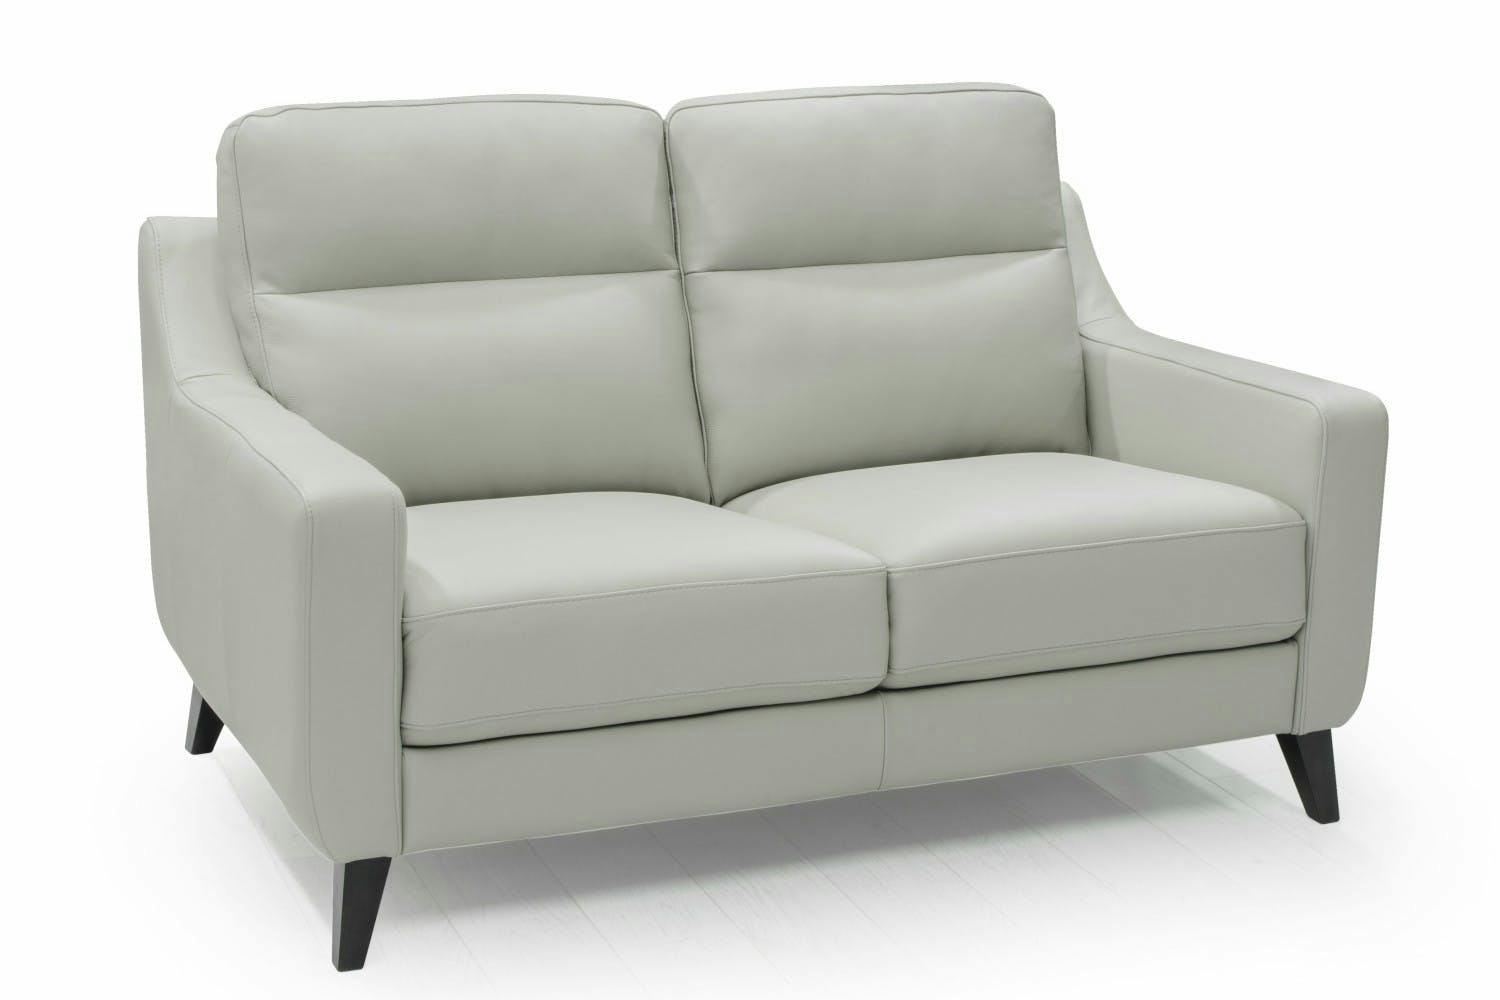 grey leather sofa harvey norman